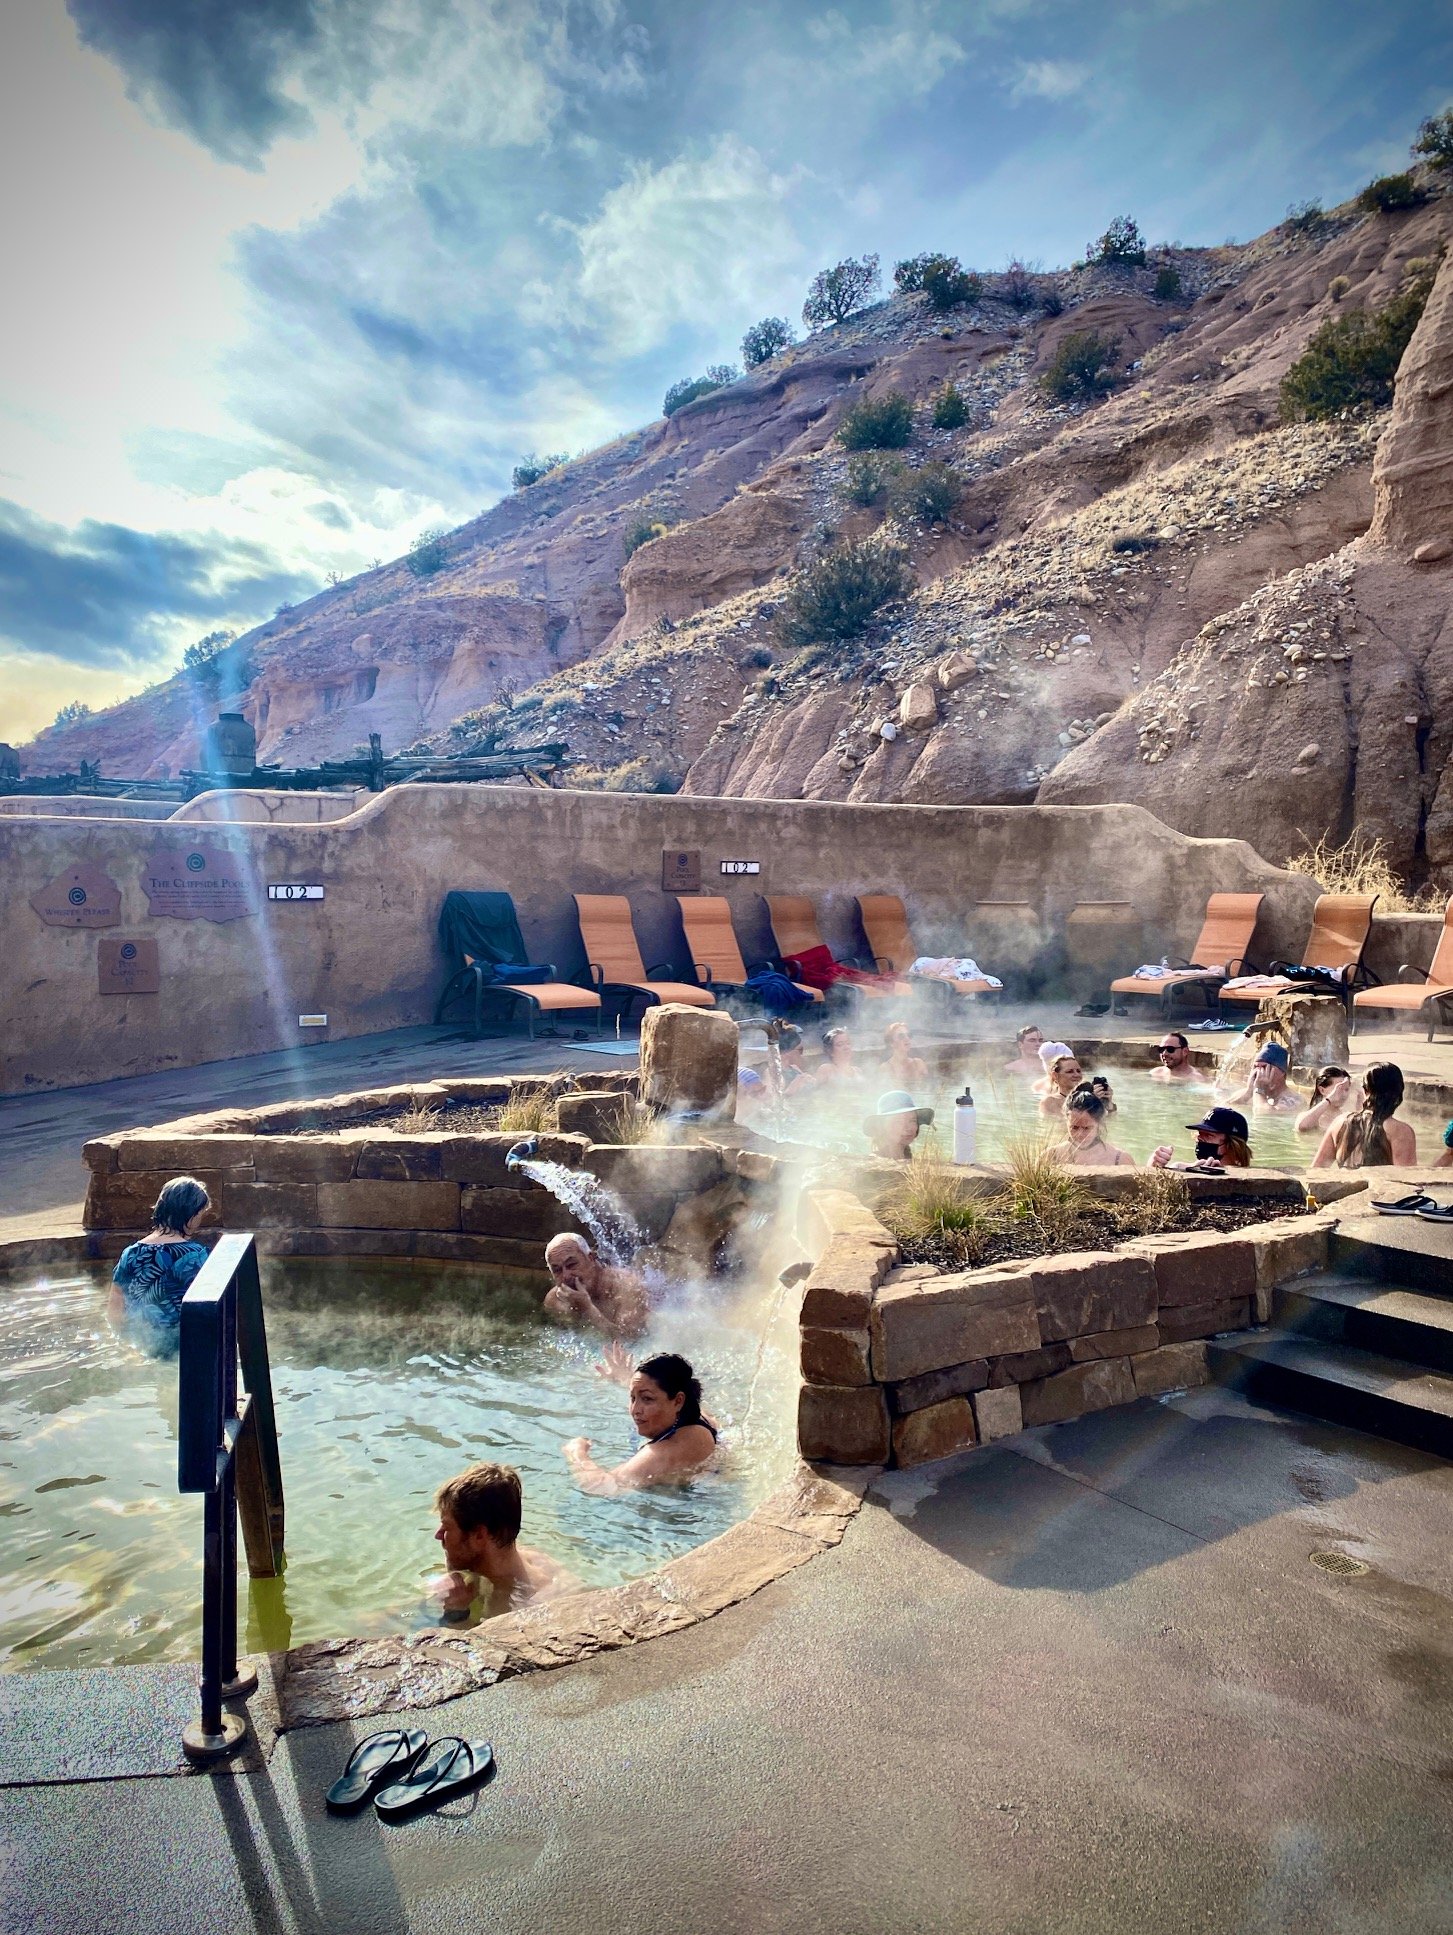 The natural hot springs at Ojo Caliente near Taos.